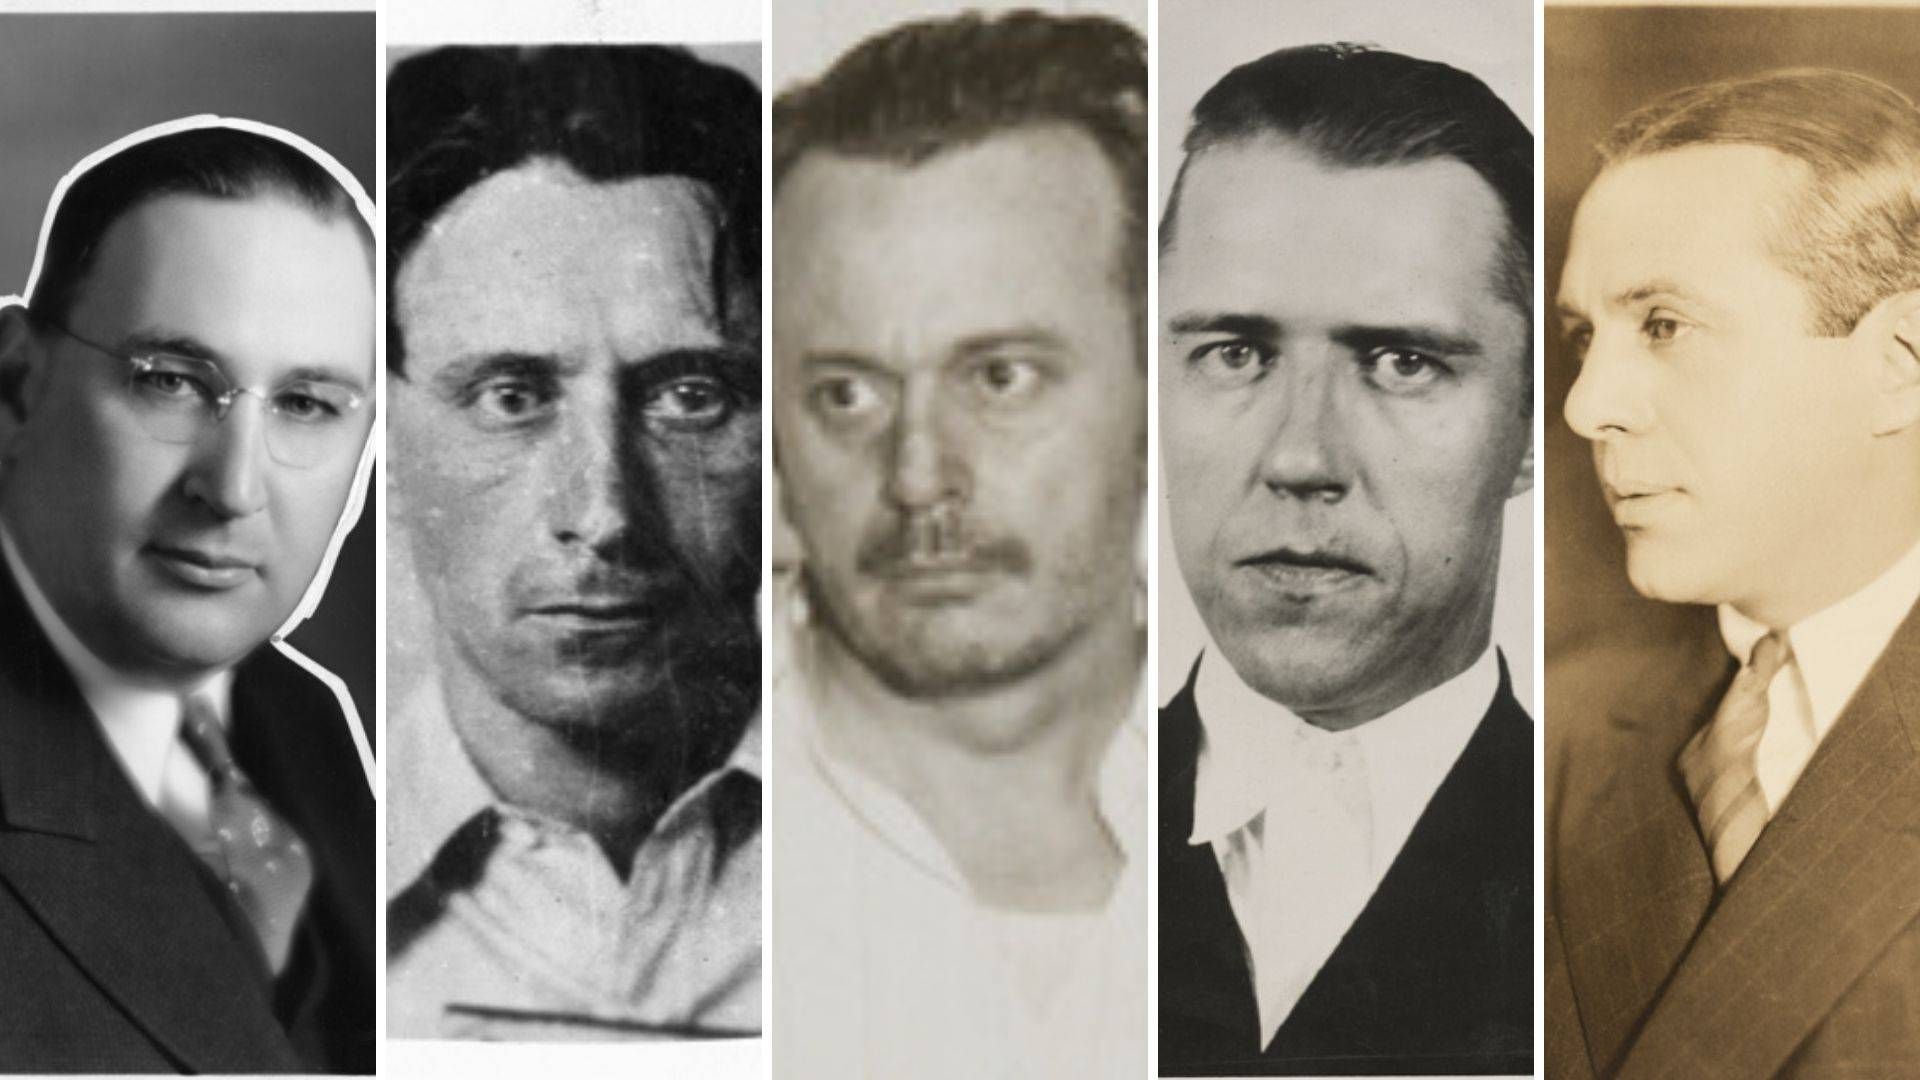 R to L: Tom Brown circa 1934, Fred Barker 1931, Arthur Barker 1935, Alvin Karpis 1936, William Hamm, Jr. 1933 | Photos courtesy of the Minnesota Historical Society